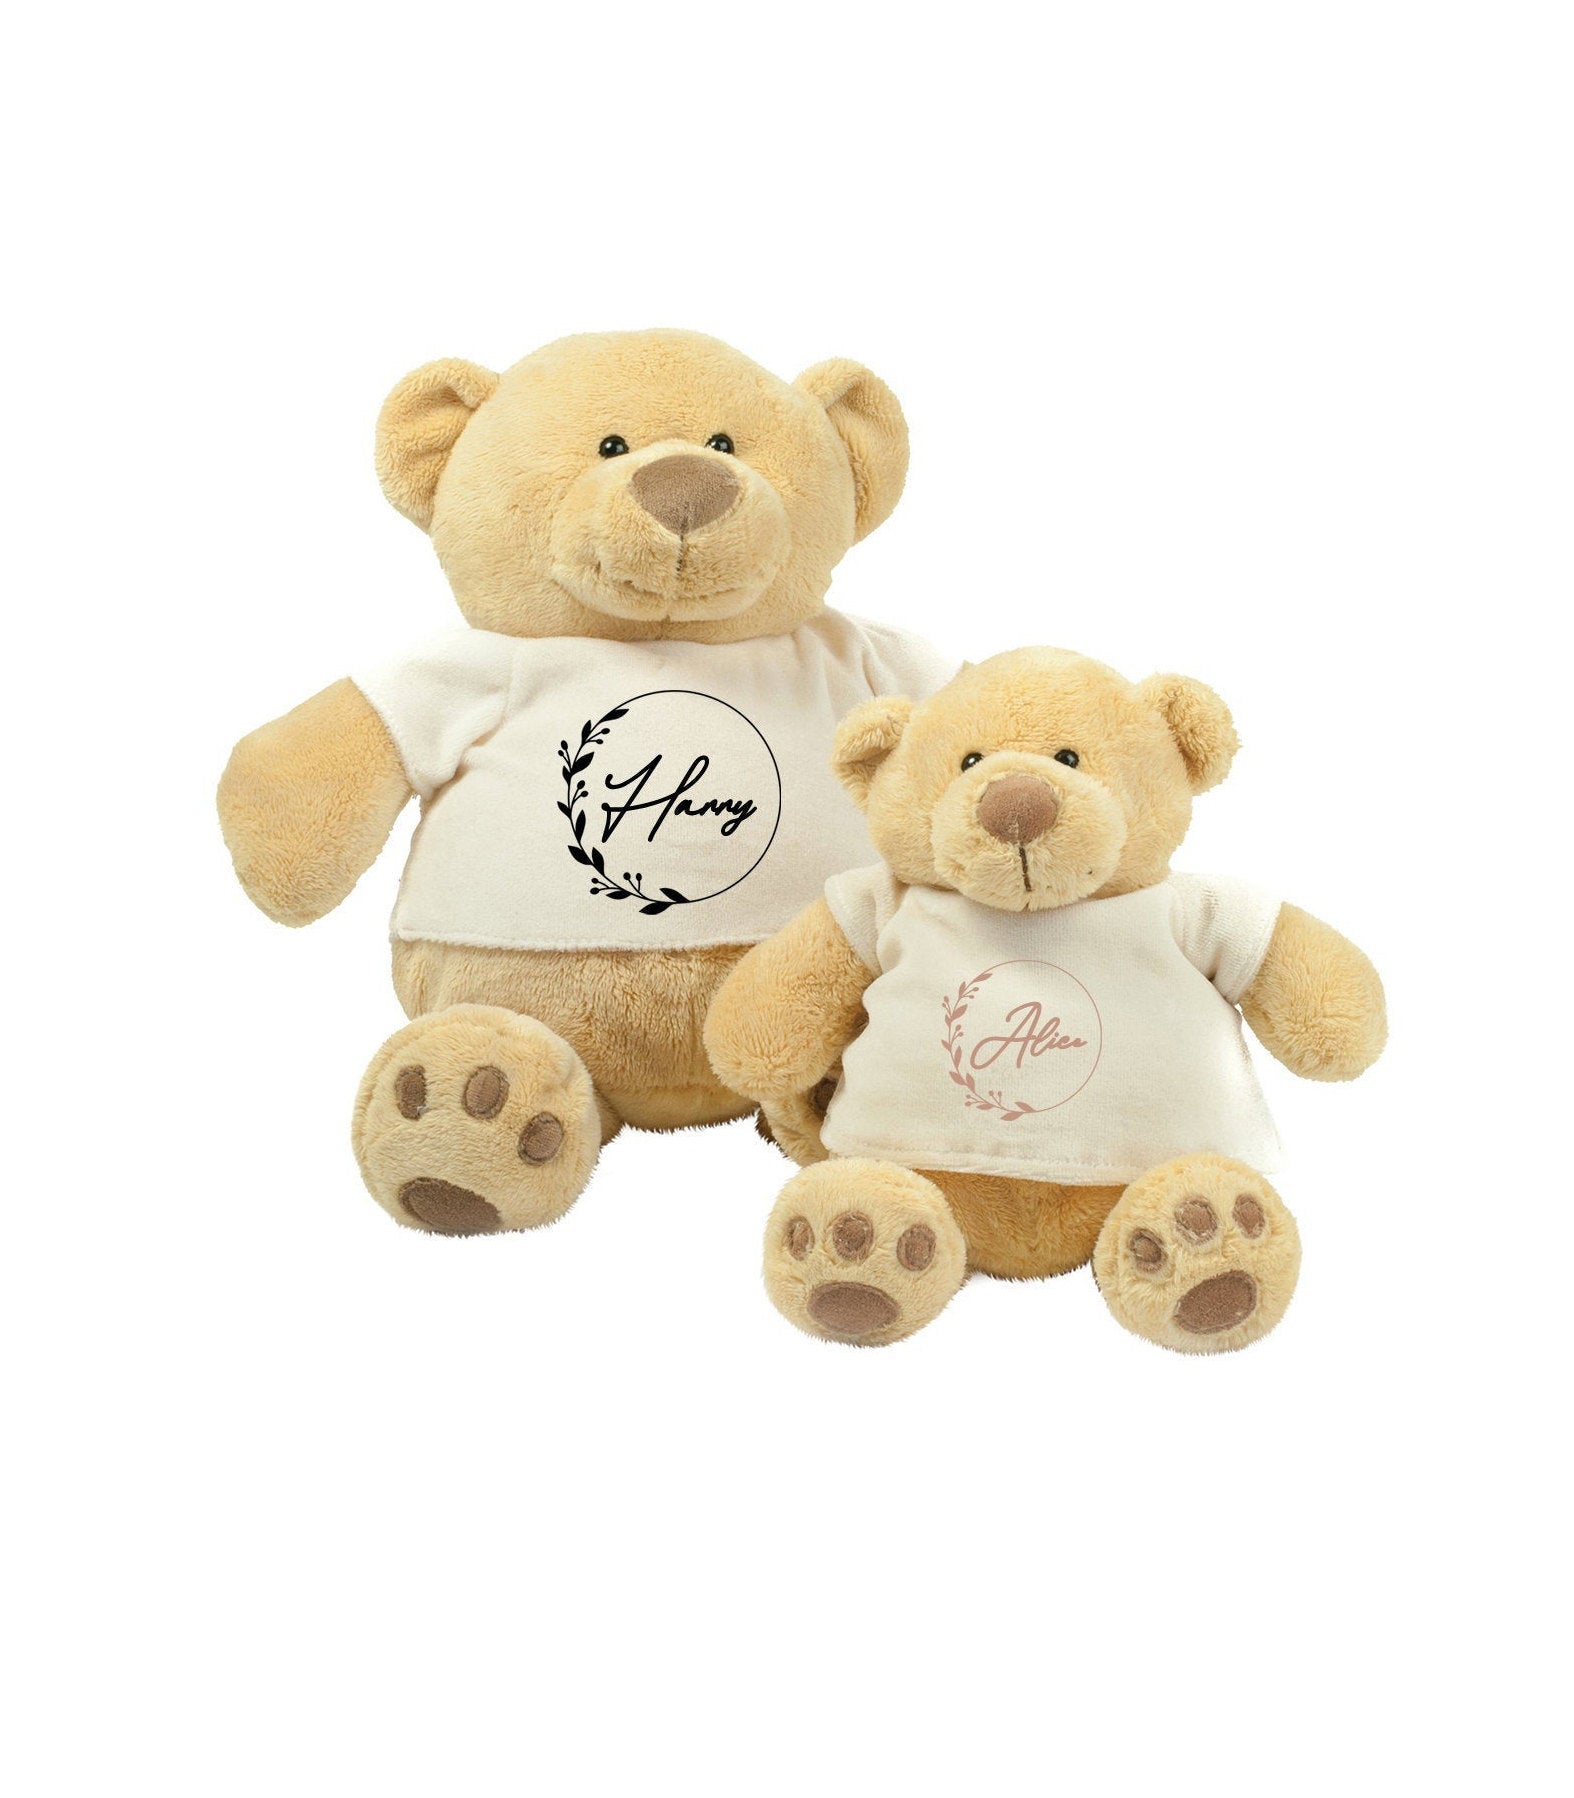 Personalised Teddy Bear Soft Toy